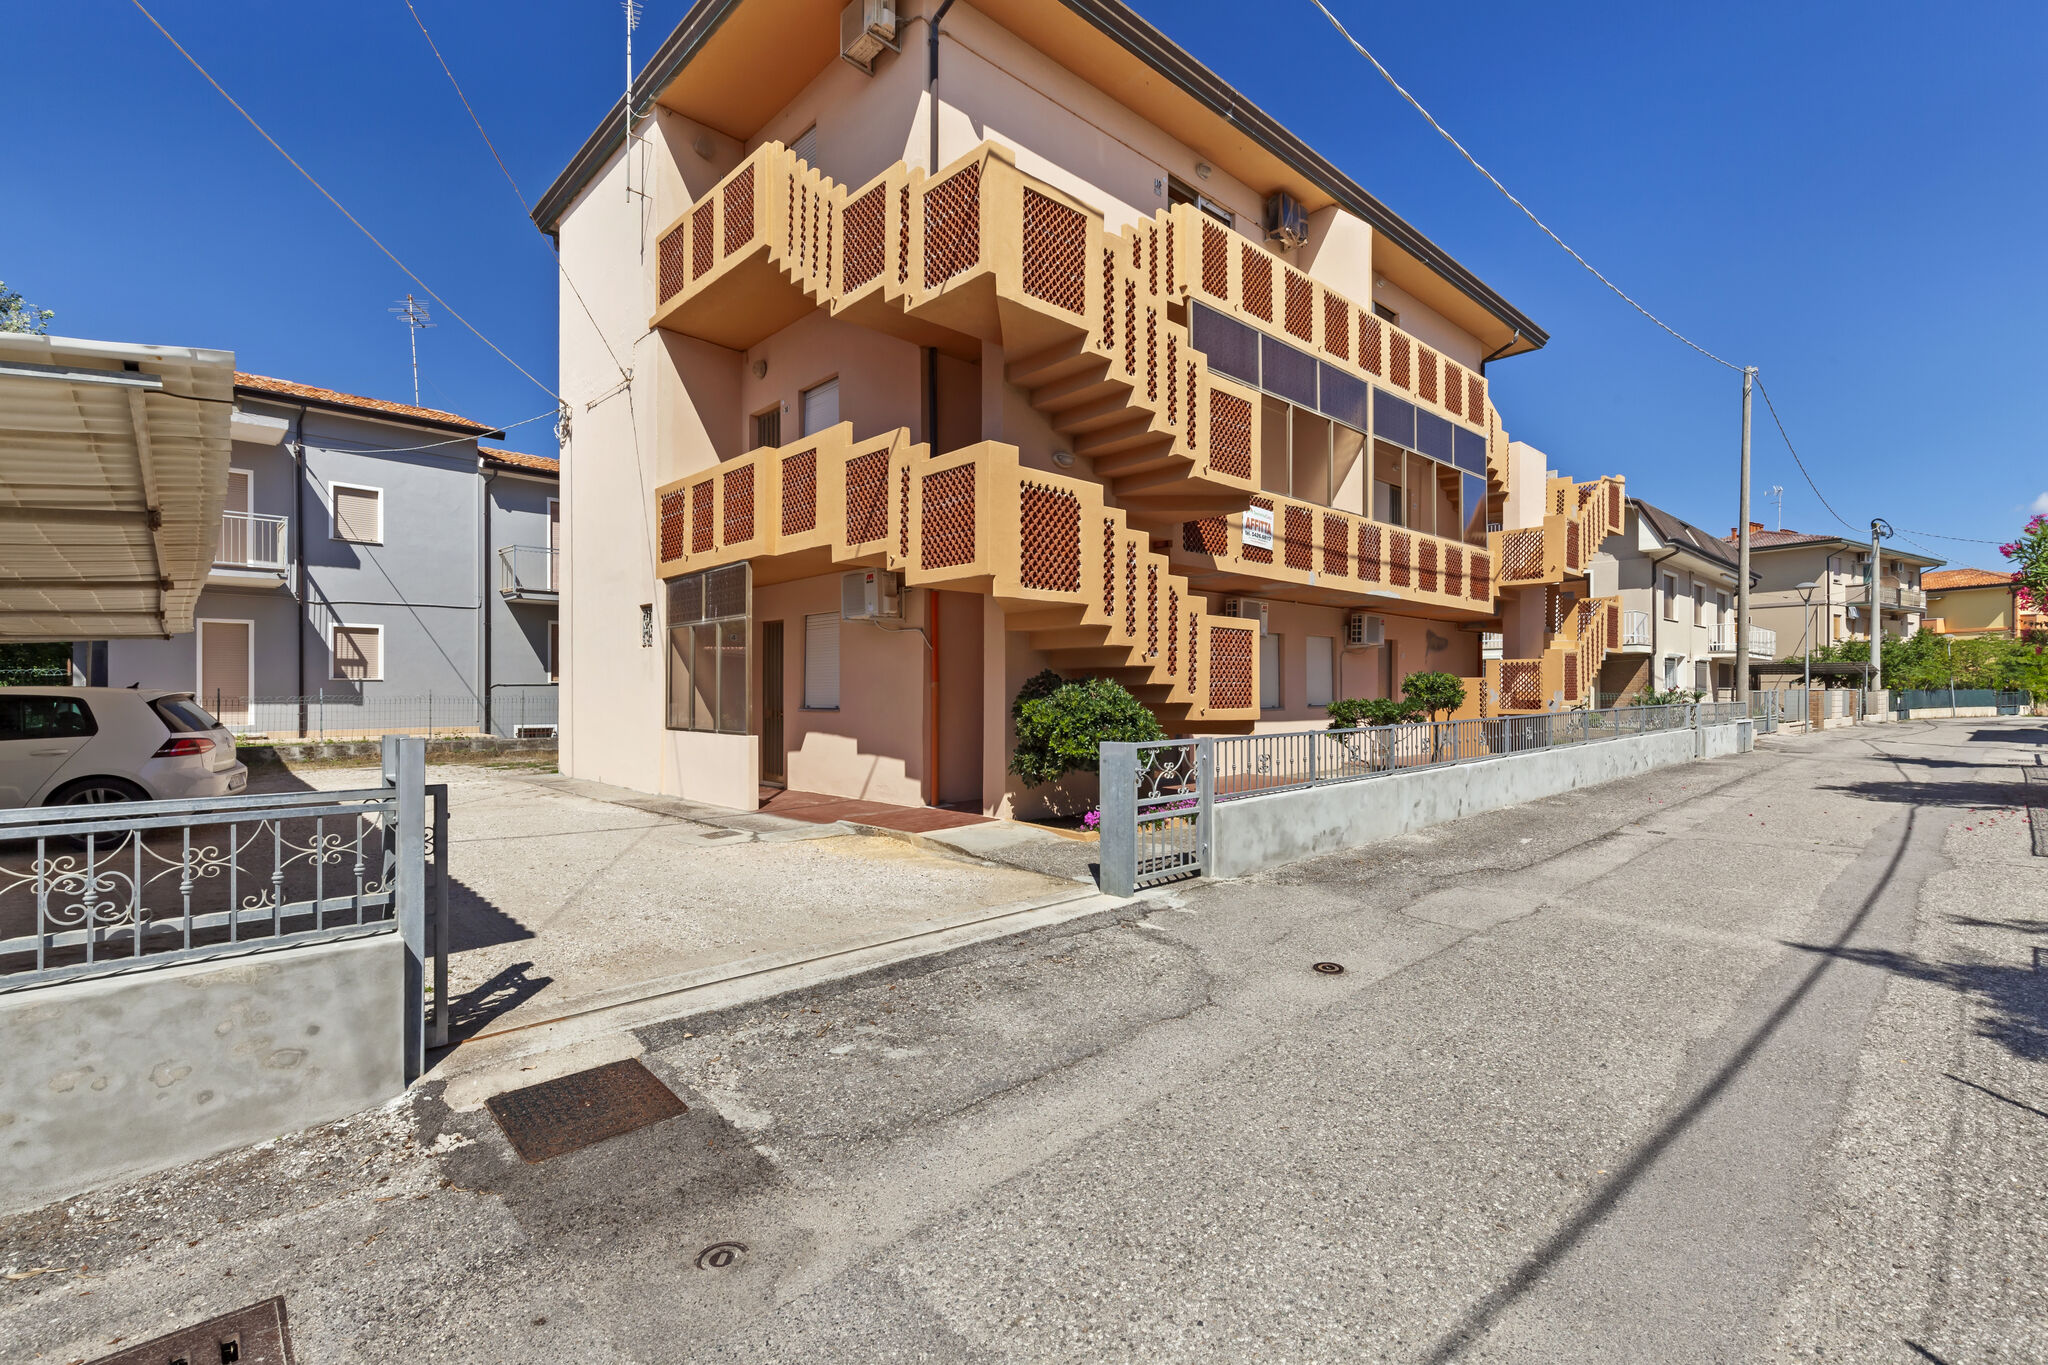 Cute beachfront apartment in Rosolina Mare, close to Venice.